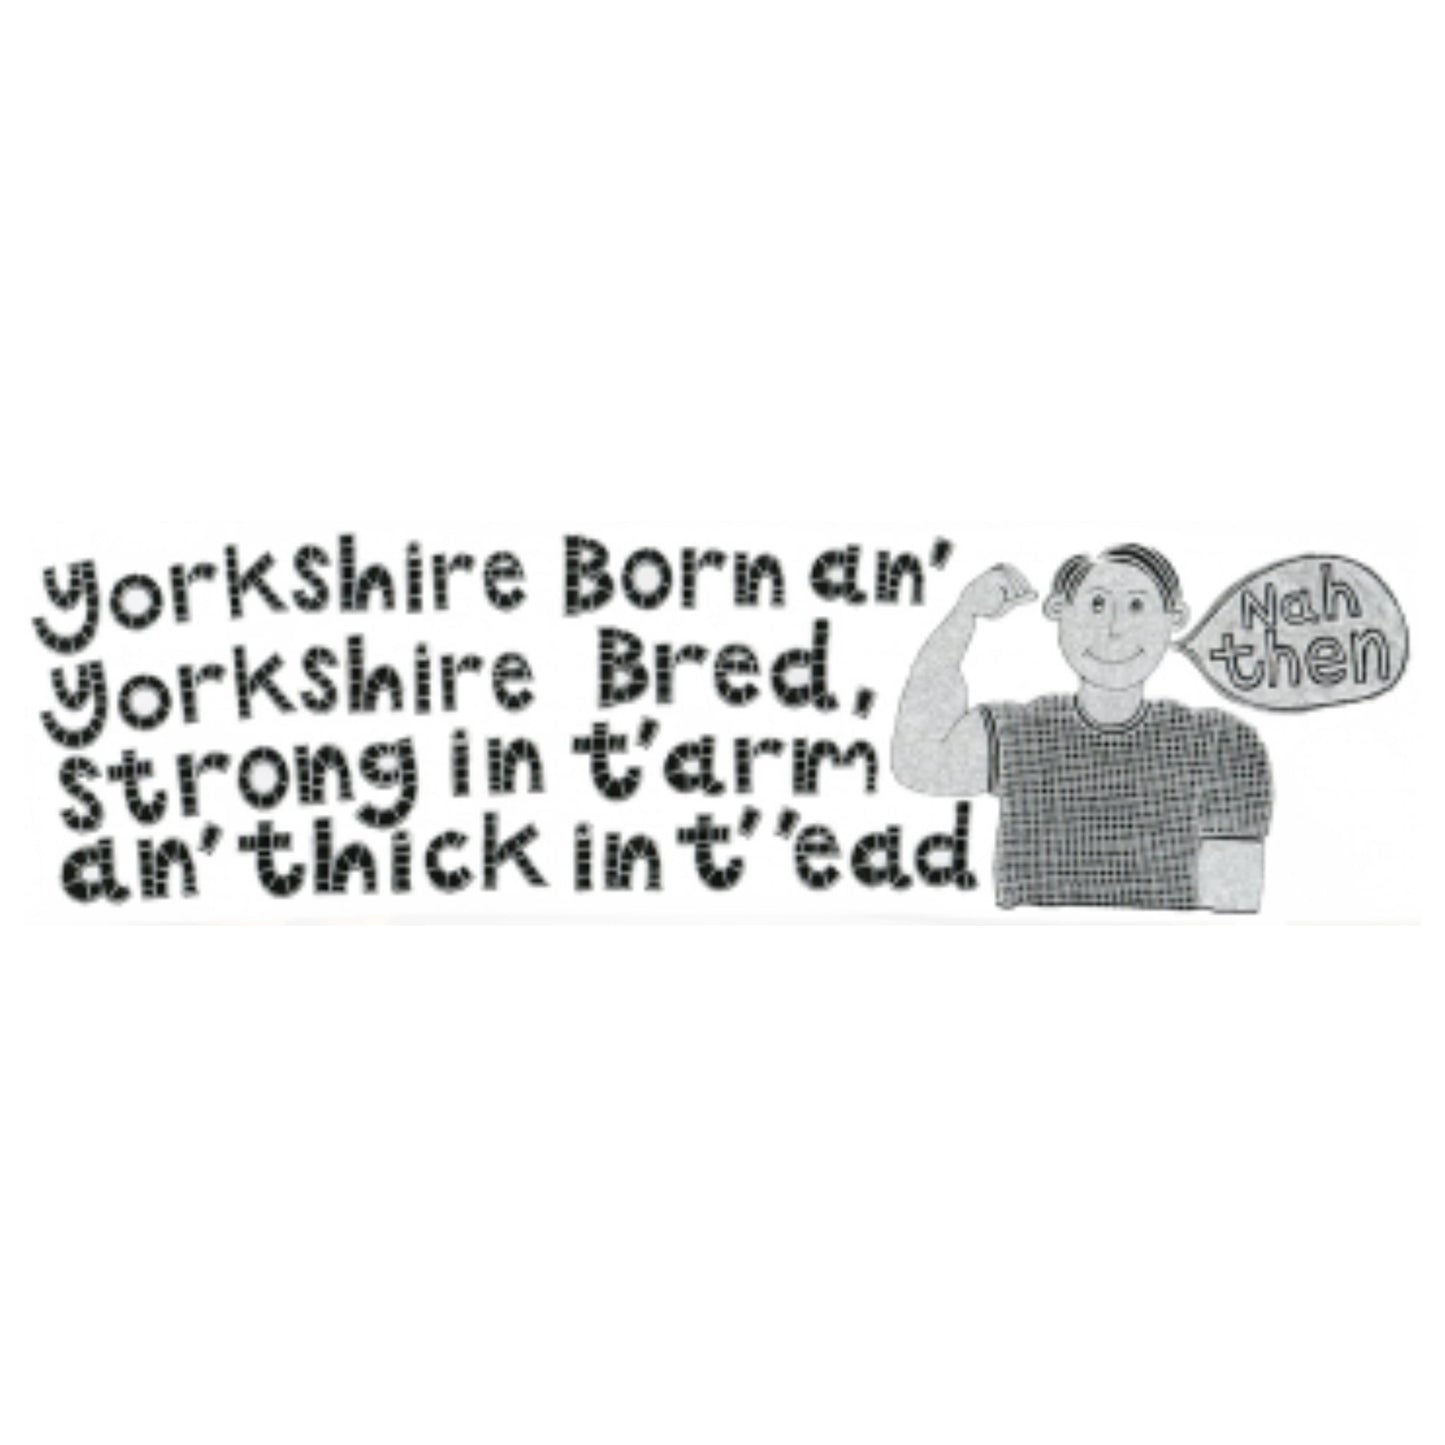 Yorkshire Born an' Yorkshire Bred Mug - The Great Yorkshire Shop